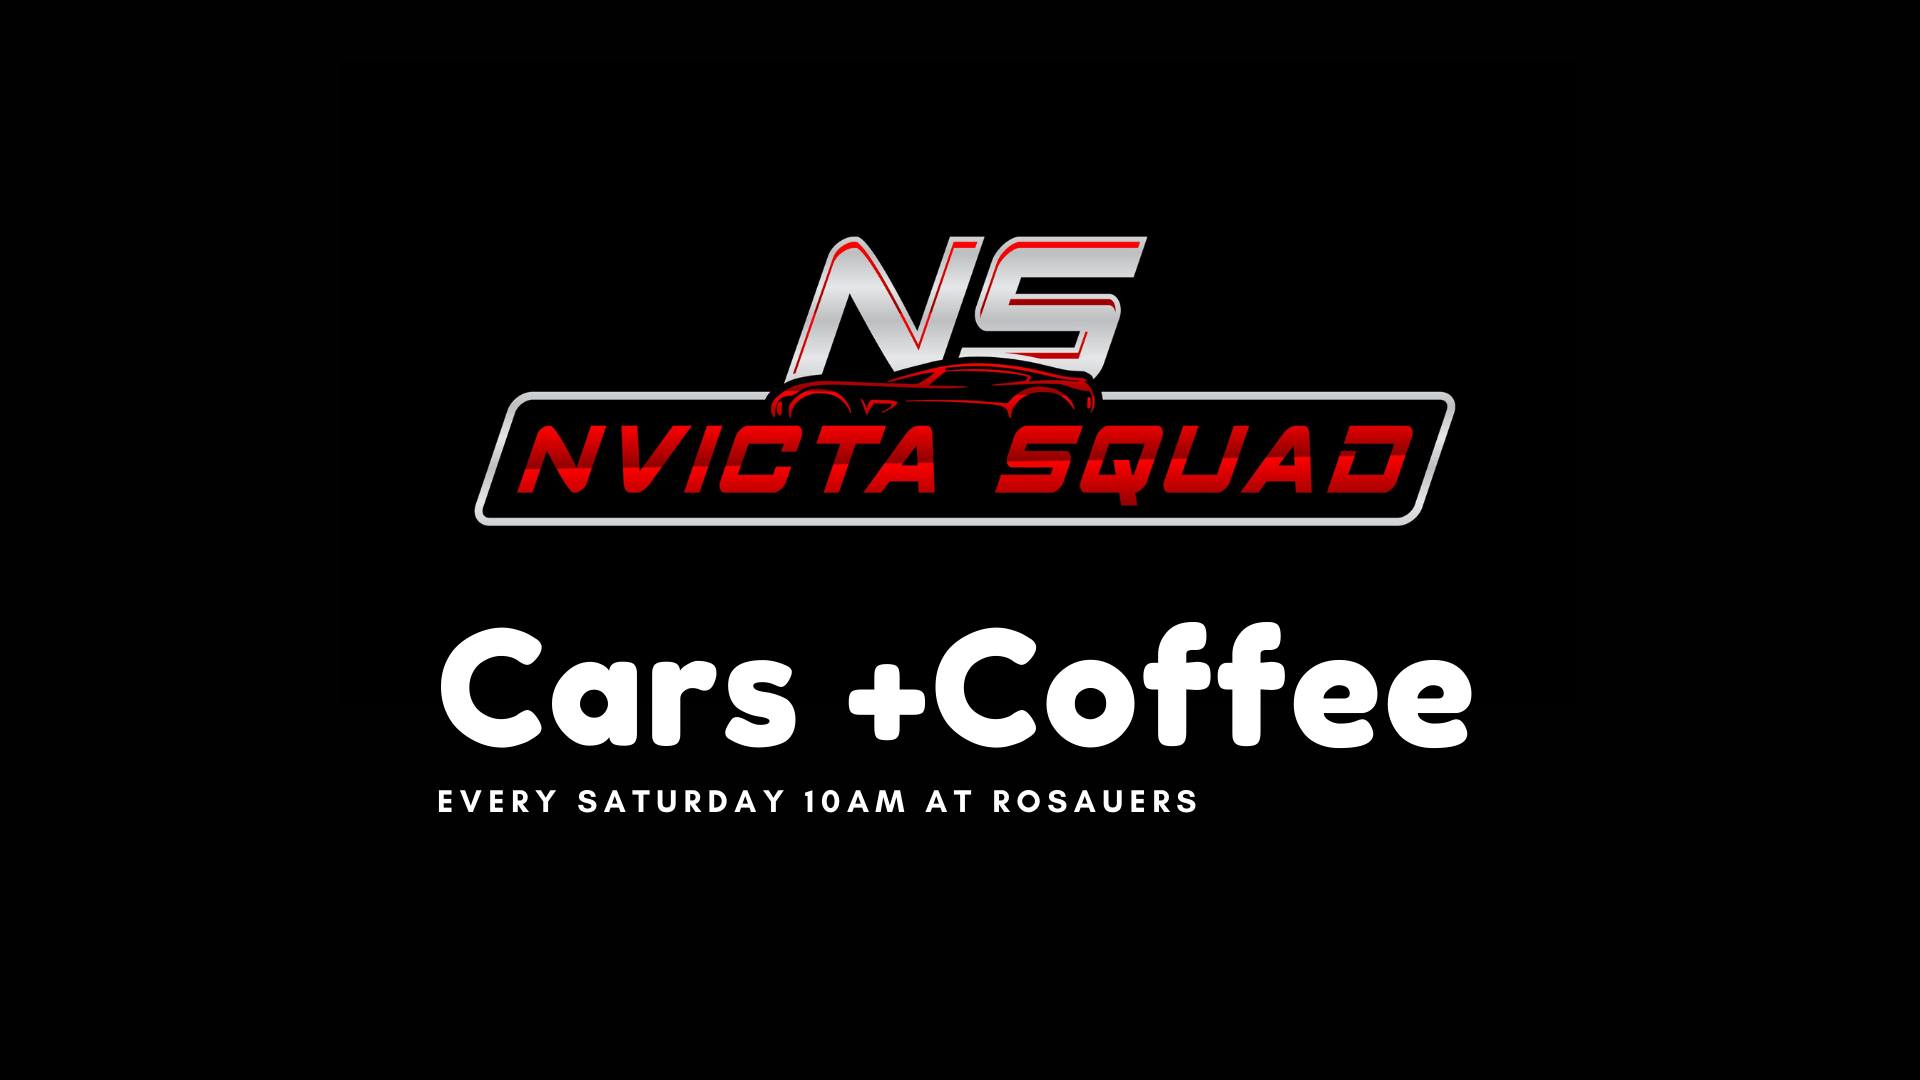 NVICTA SQUAD Cars +Coffee